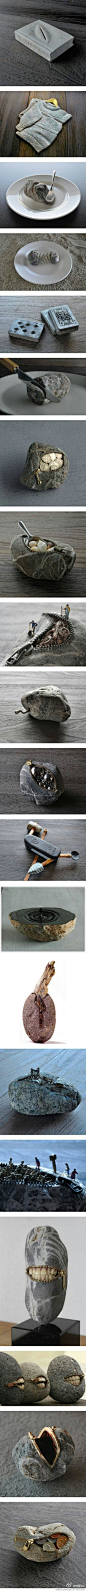 日本艺术家 Hirotoshi Itoh 对石头的理解，很牛B的表達！@linda晴子